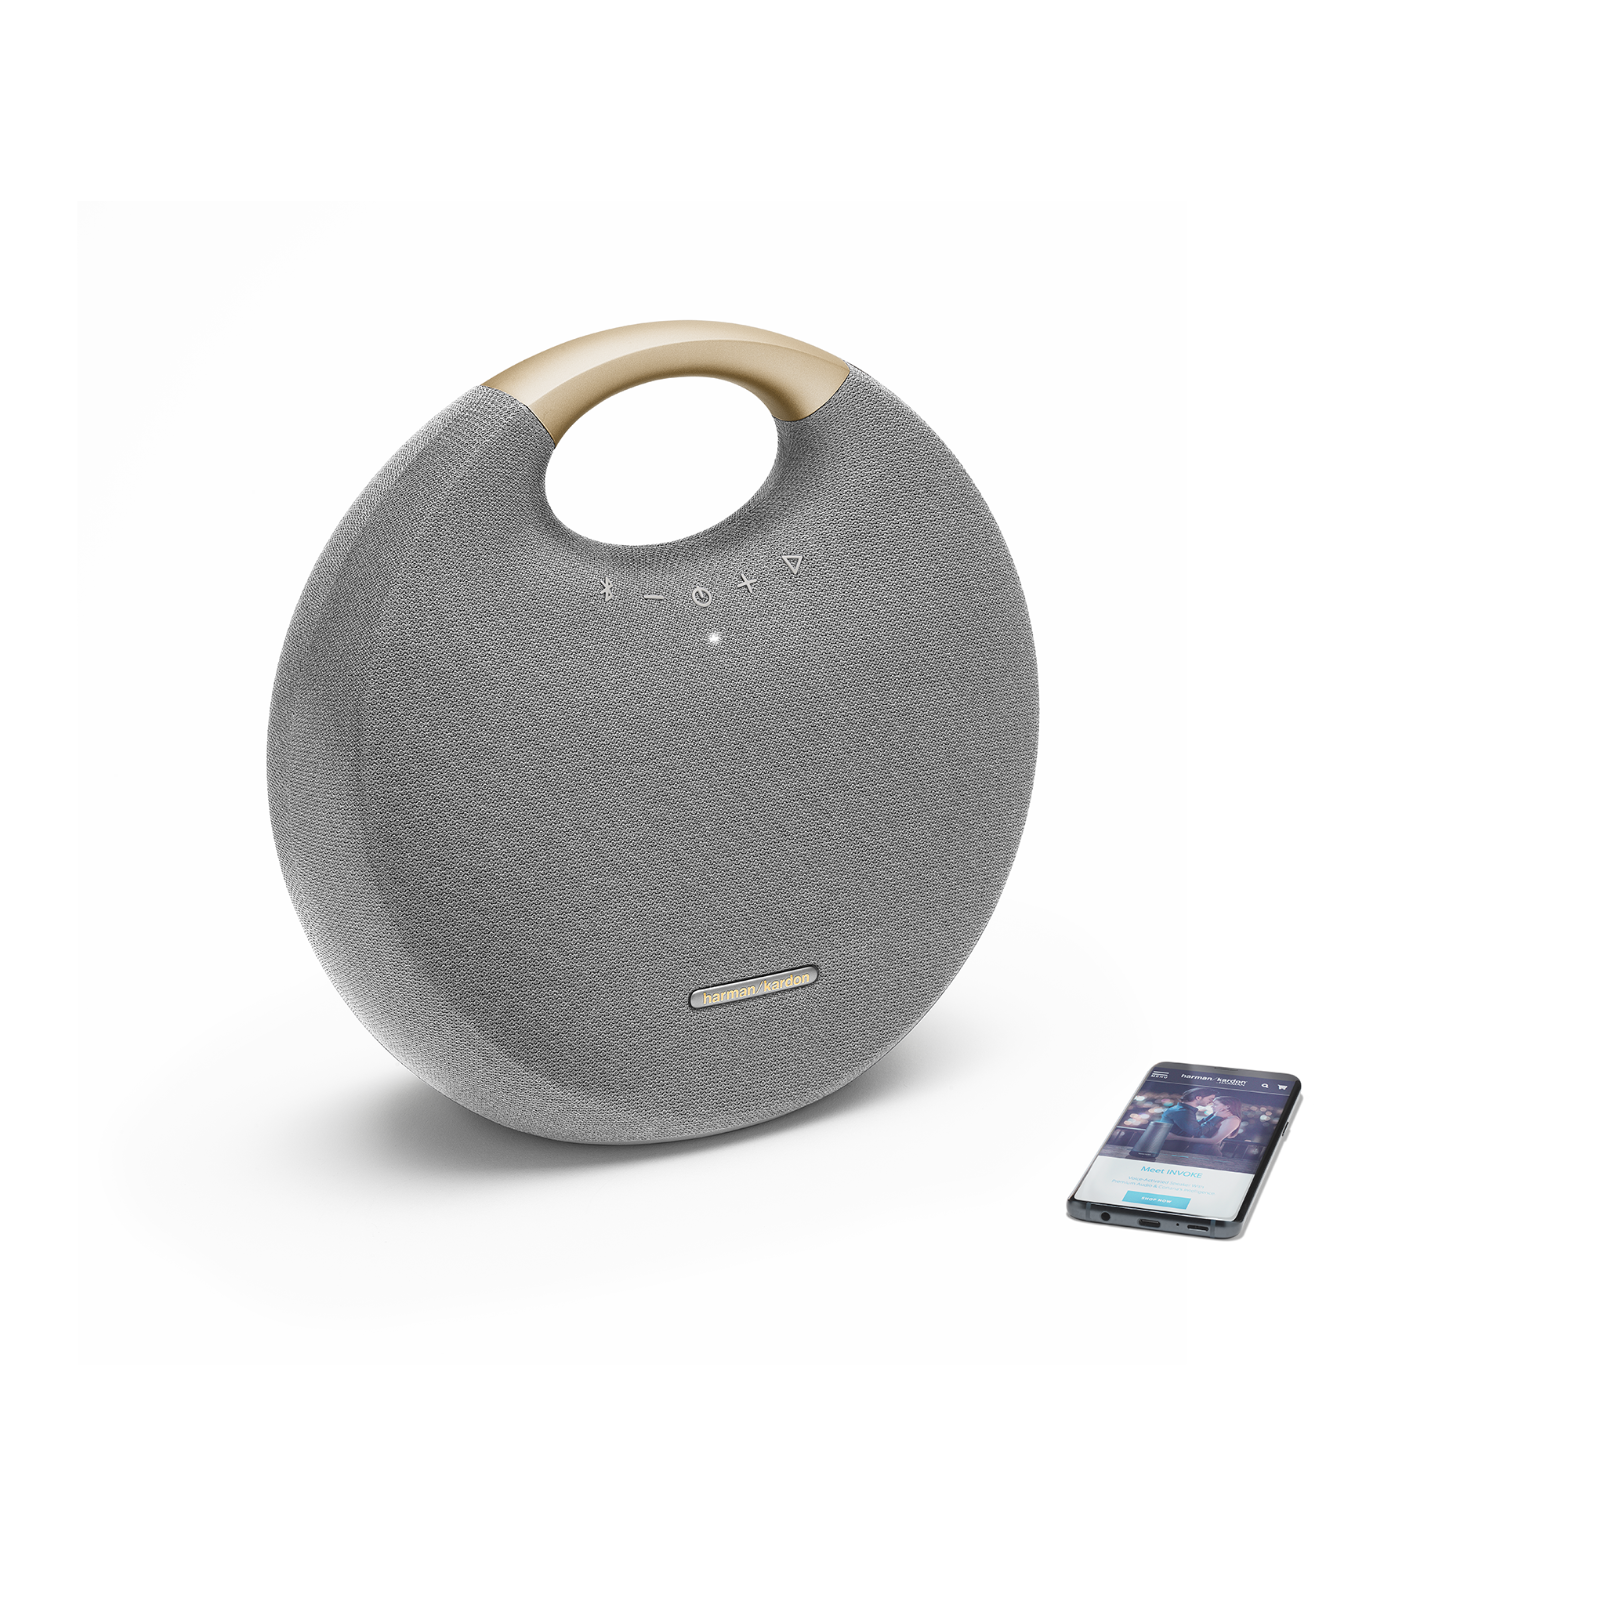 Onyx Studio 6 - Grey - Portable Bluetooth speaker - Detailshot 2